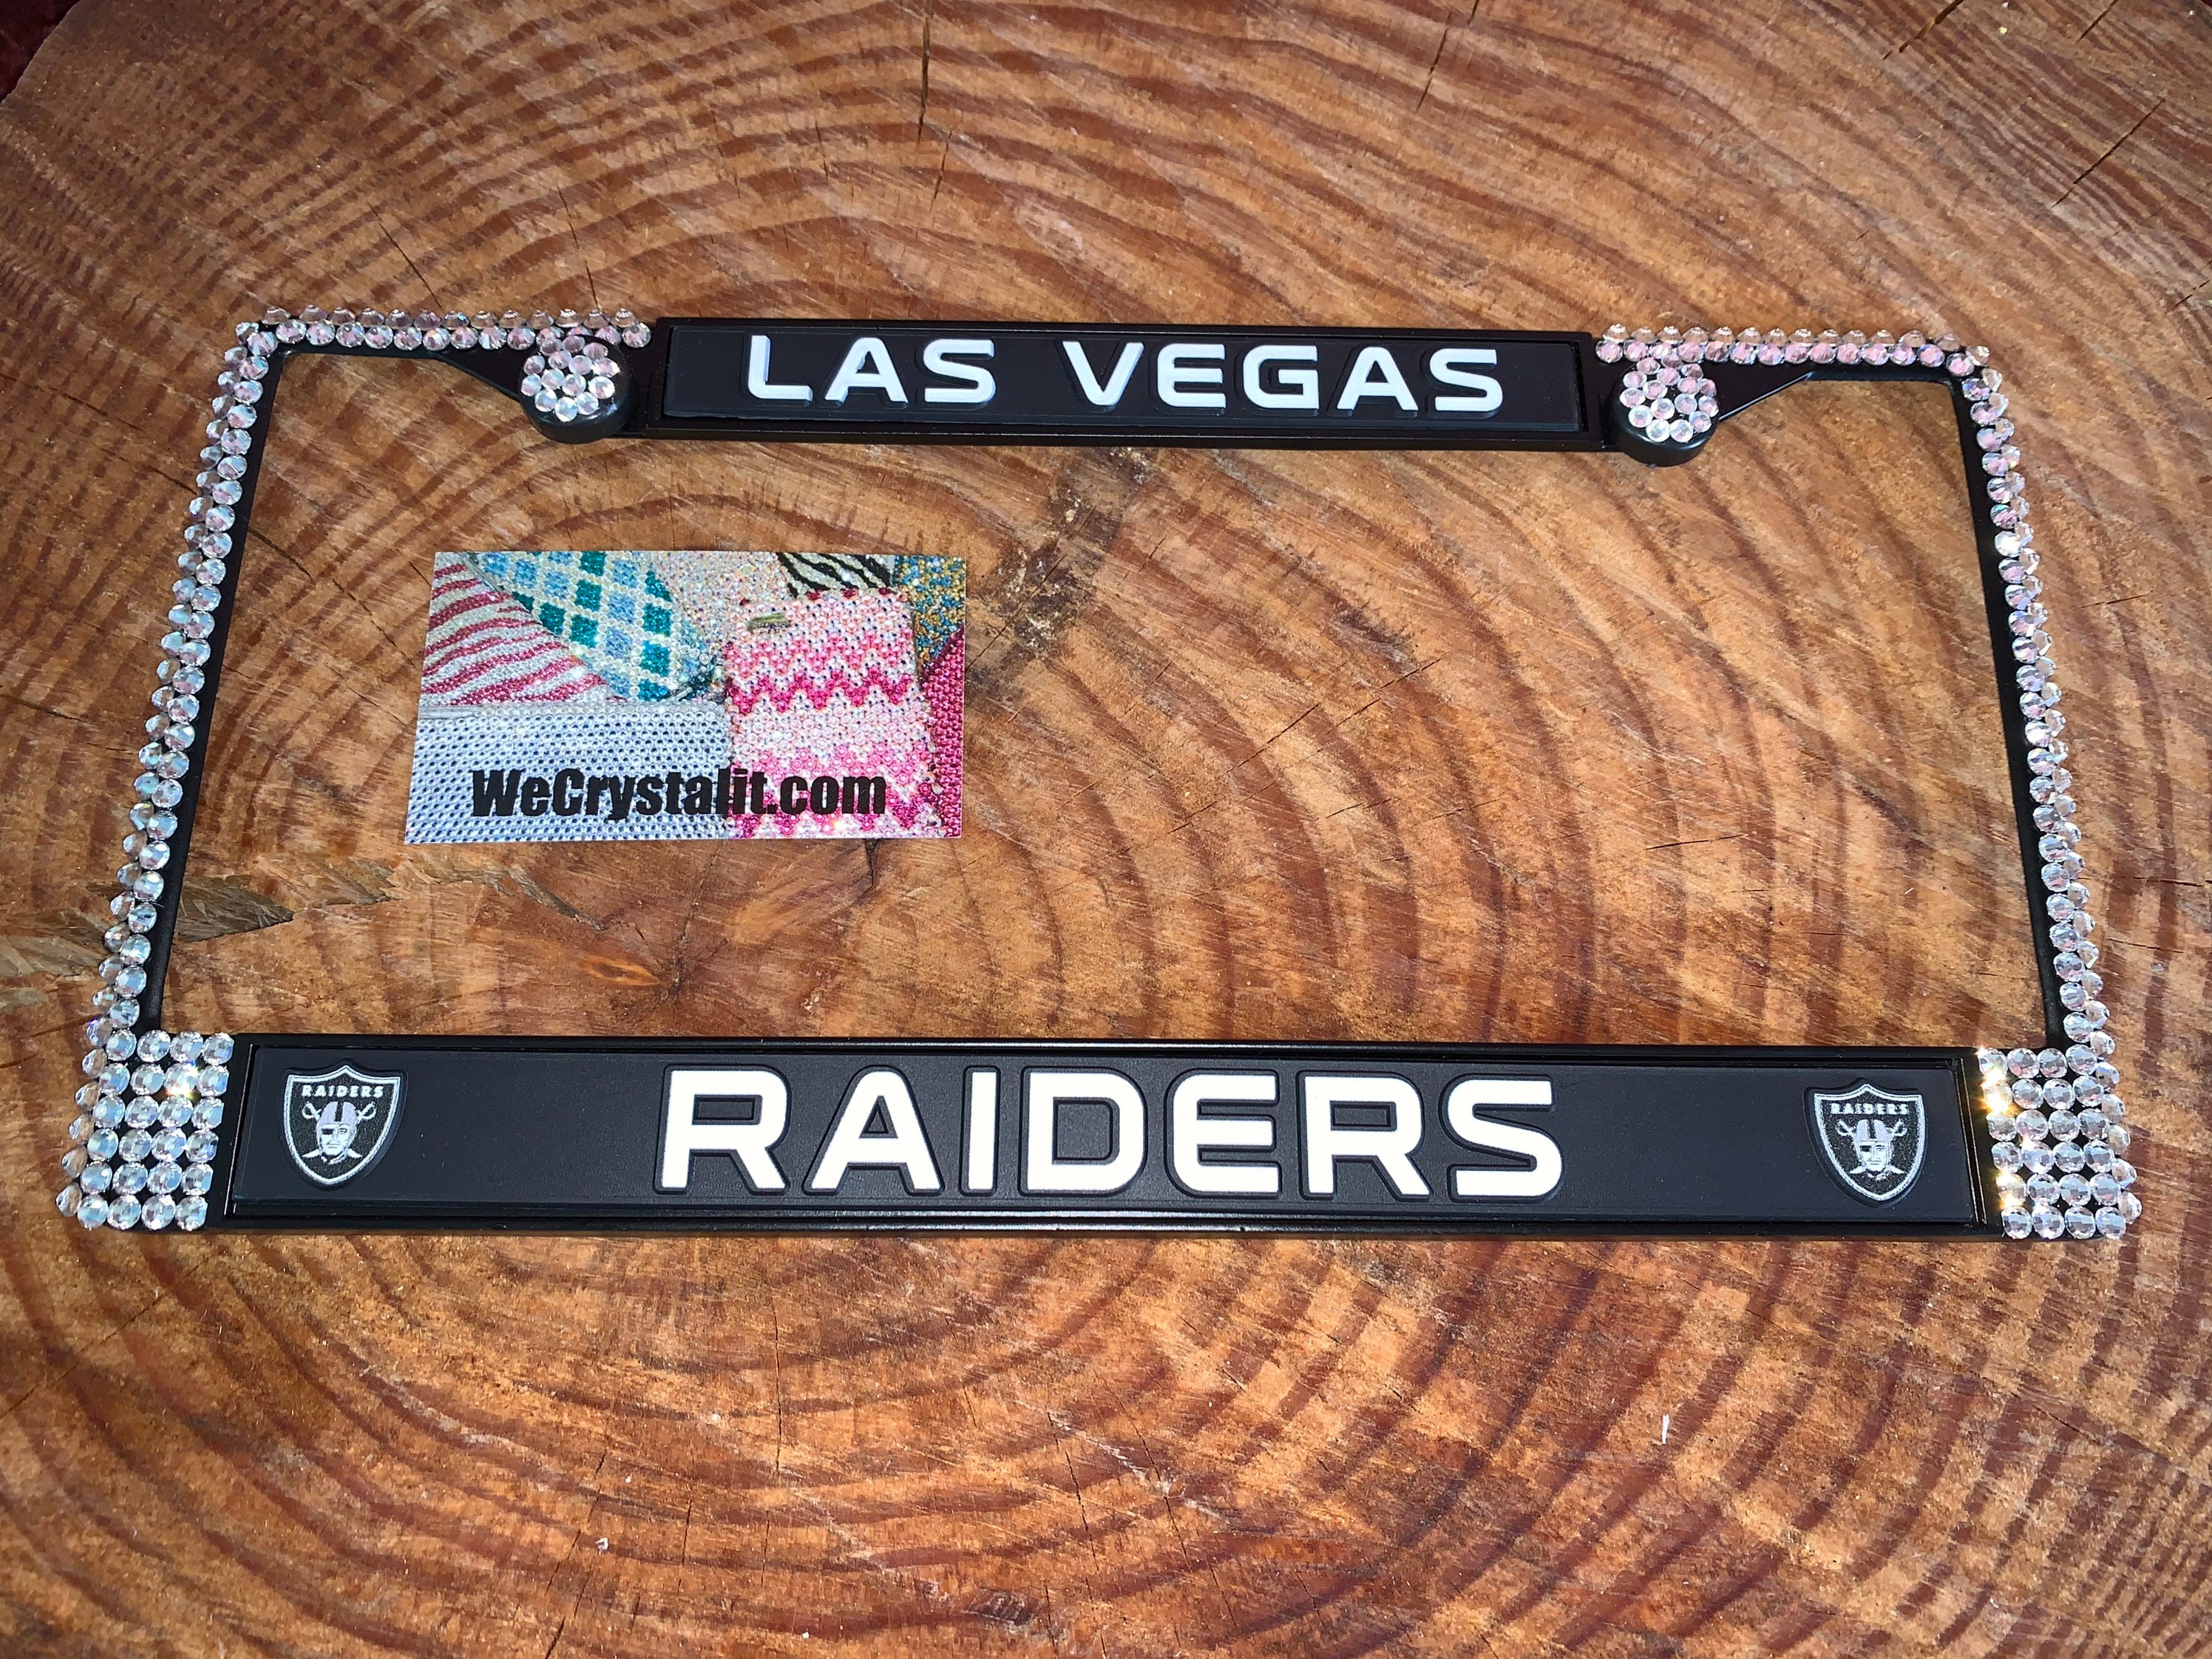 Set of 2 Las Vegas Raiders Black Plastic or Aluminum Car License Plate